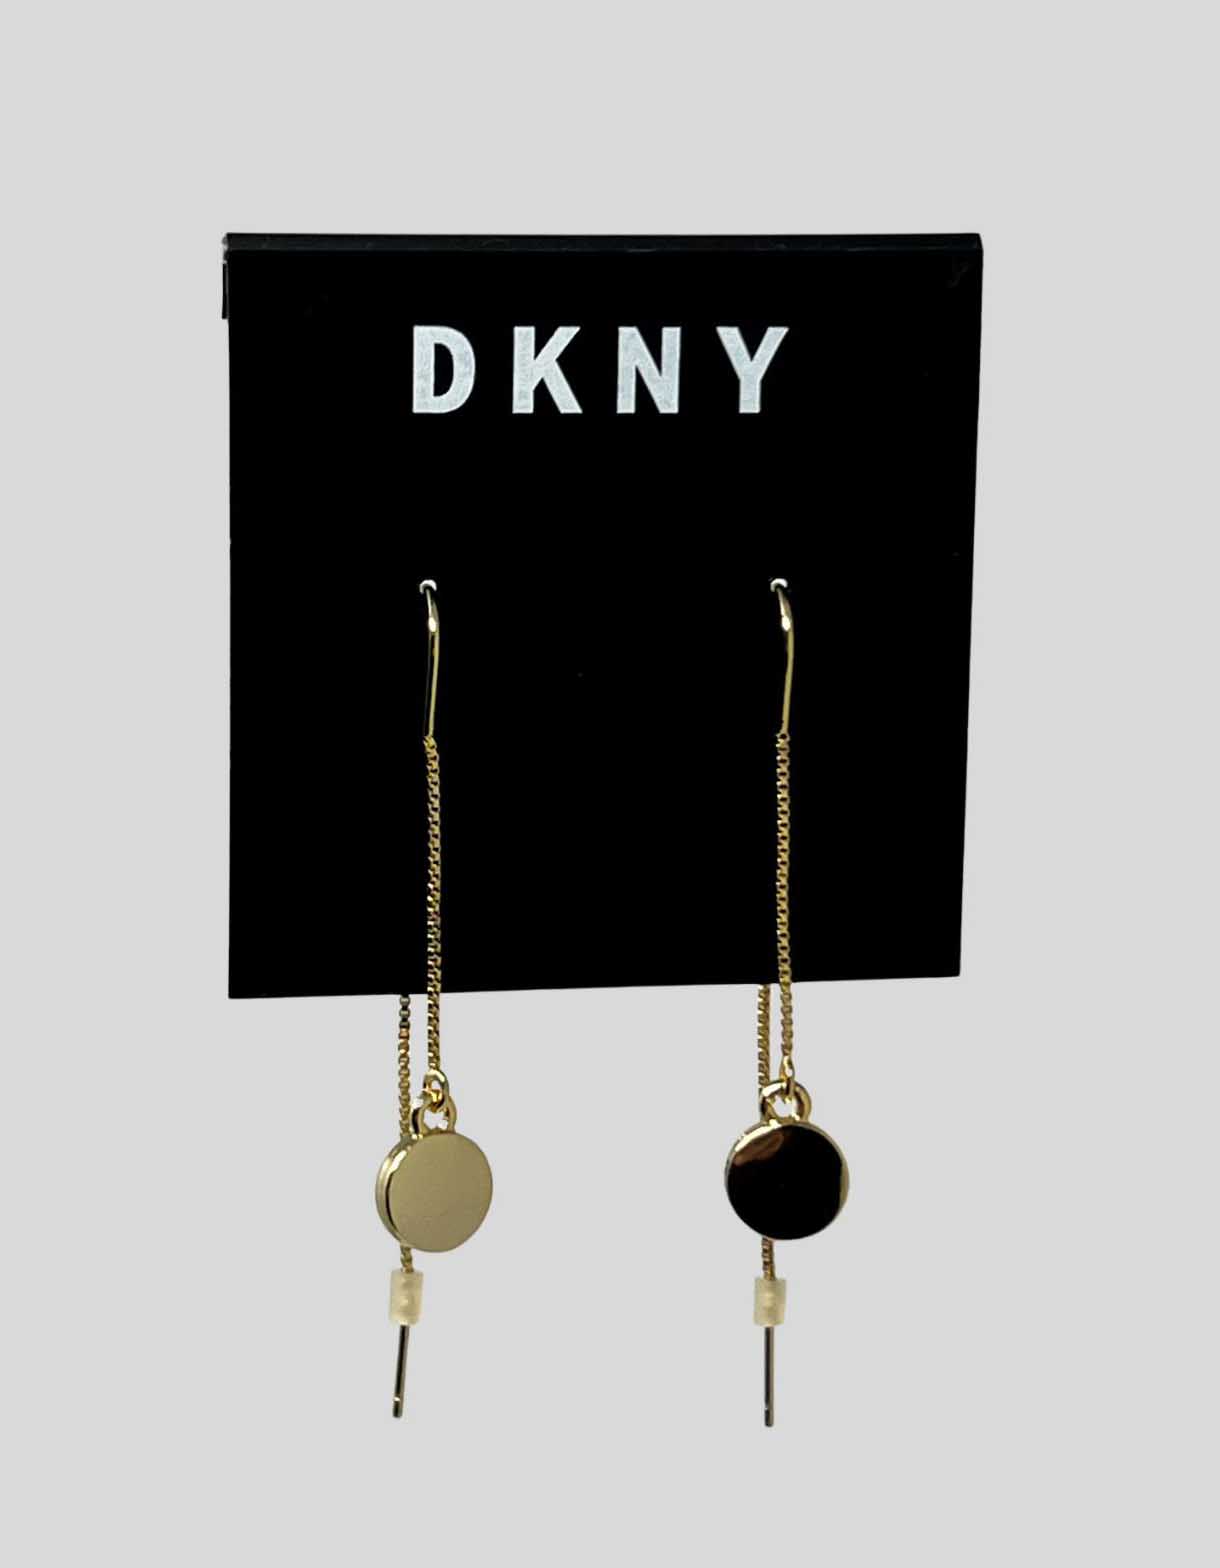 DKNY Gold-Tone Threader Earrings w/ Tags